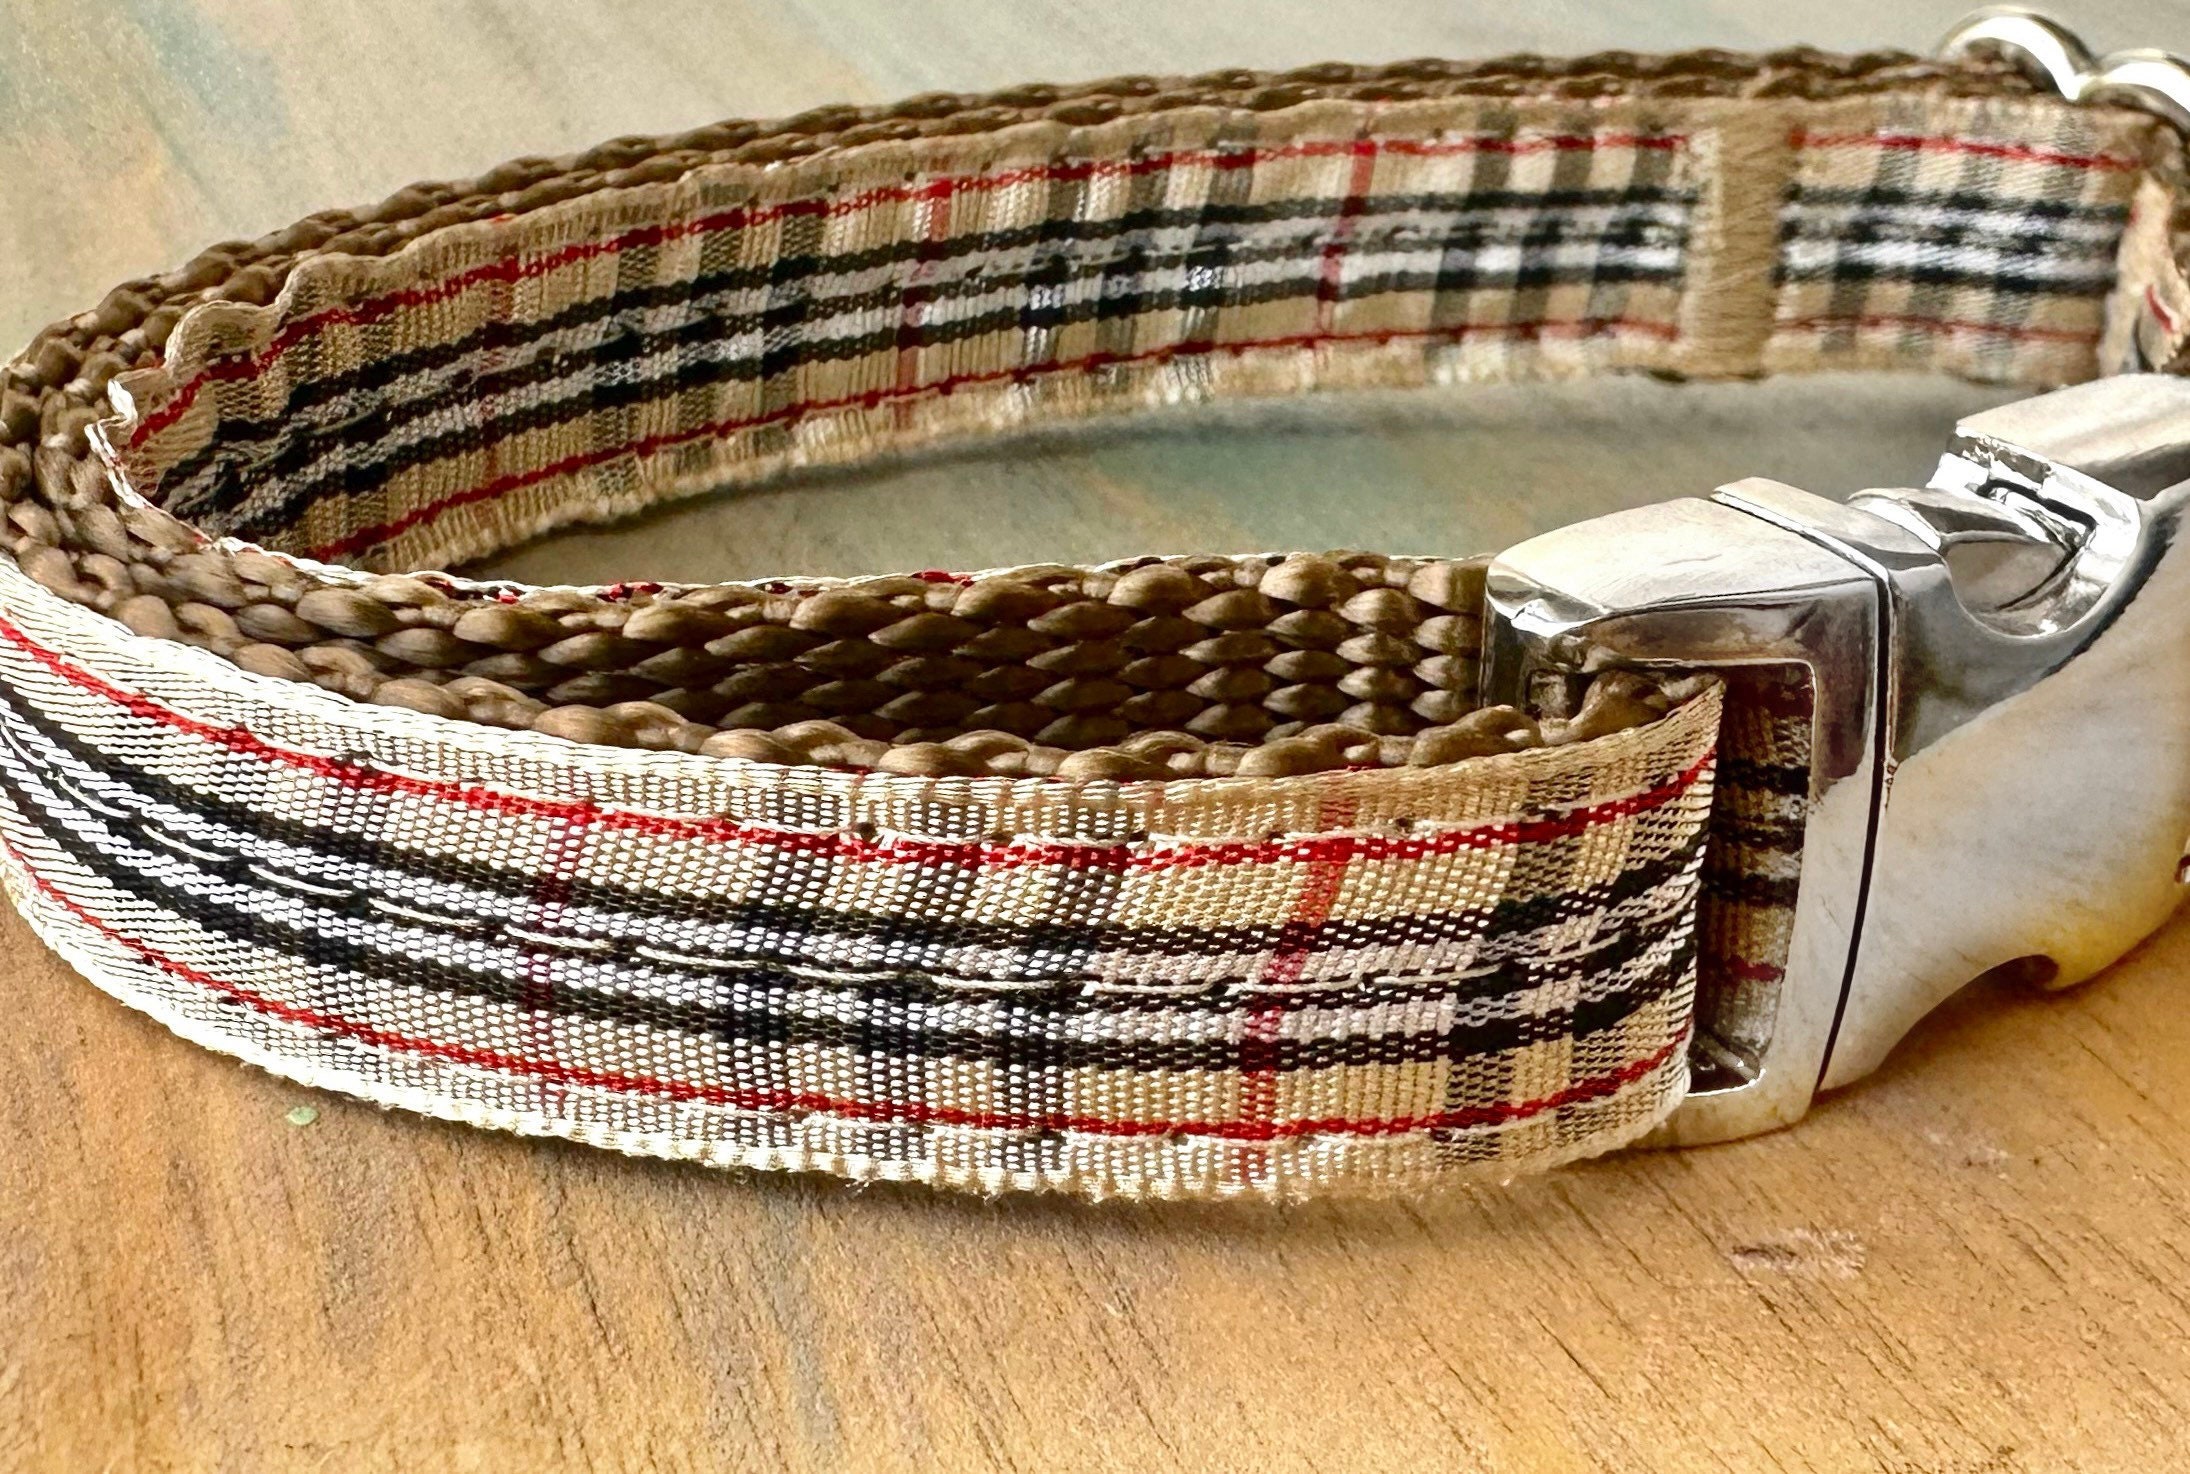 Burberry Medium Vintage Check Dog Collar - Neutrals